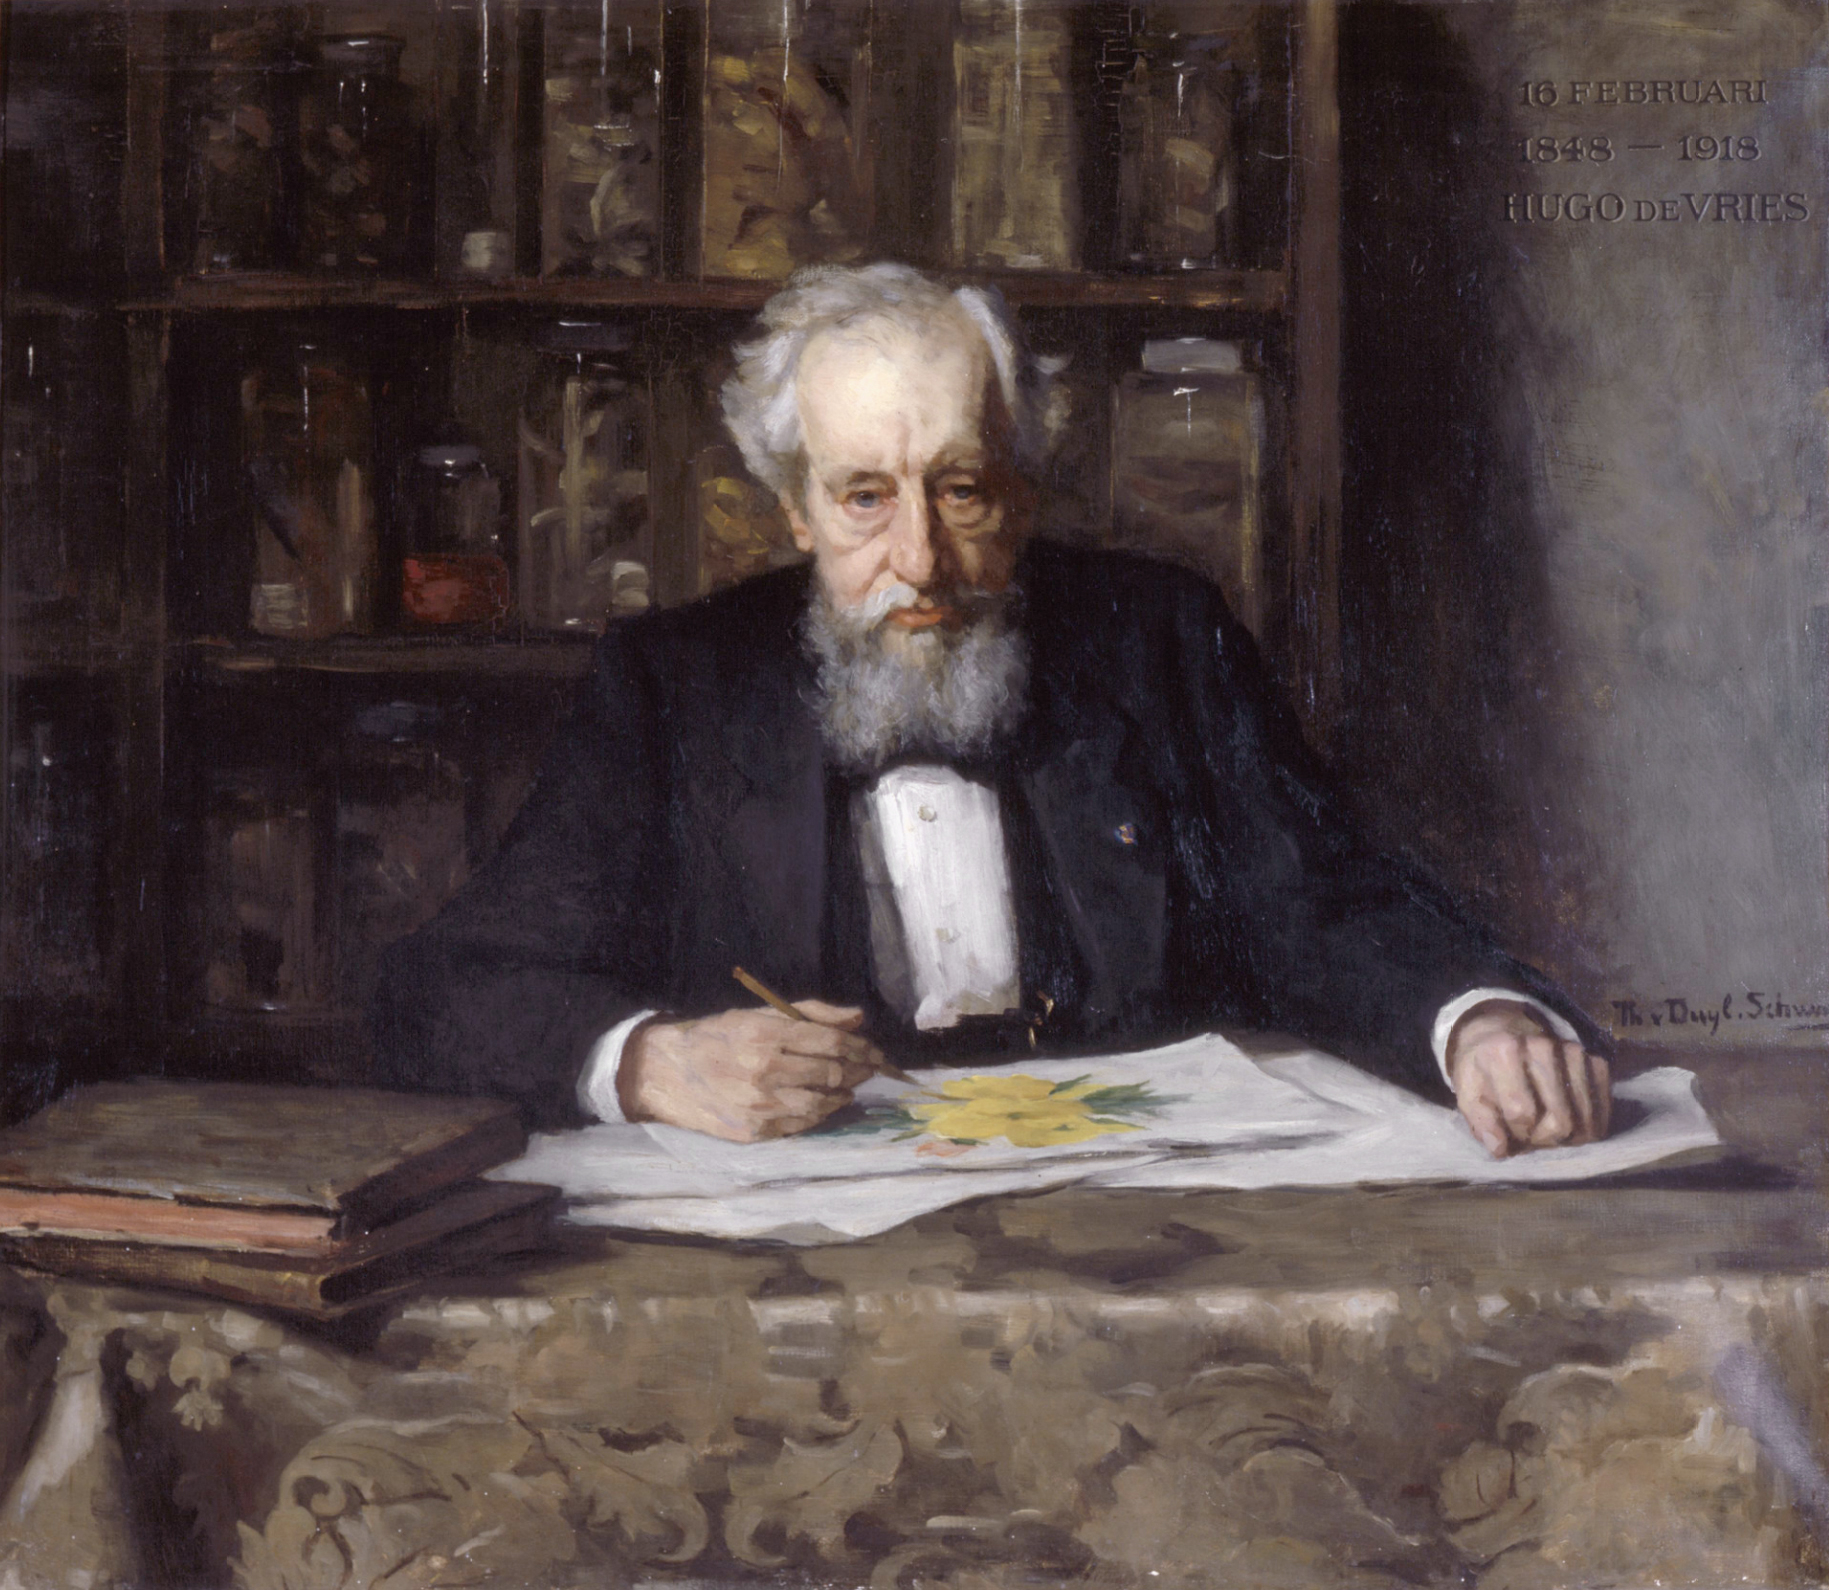 A painting of Hugo de Vries in his retirement, by Thérèse Schwartze